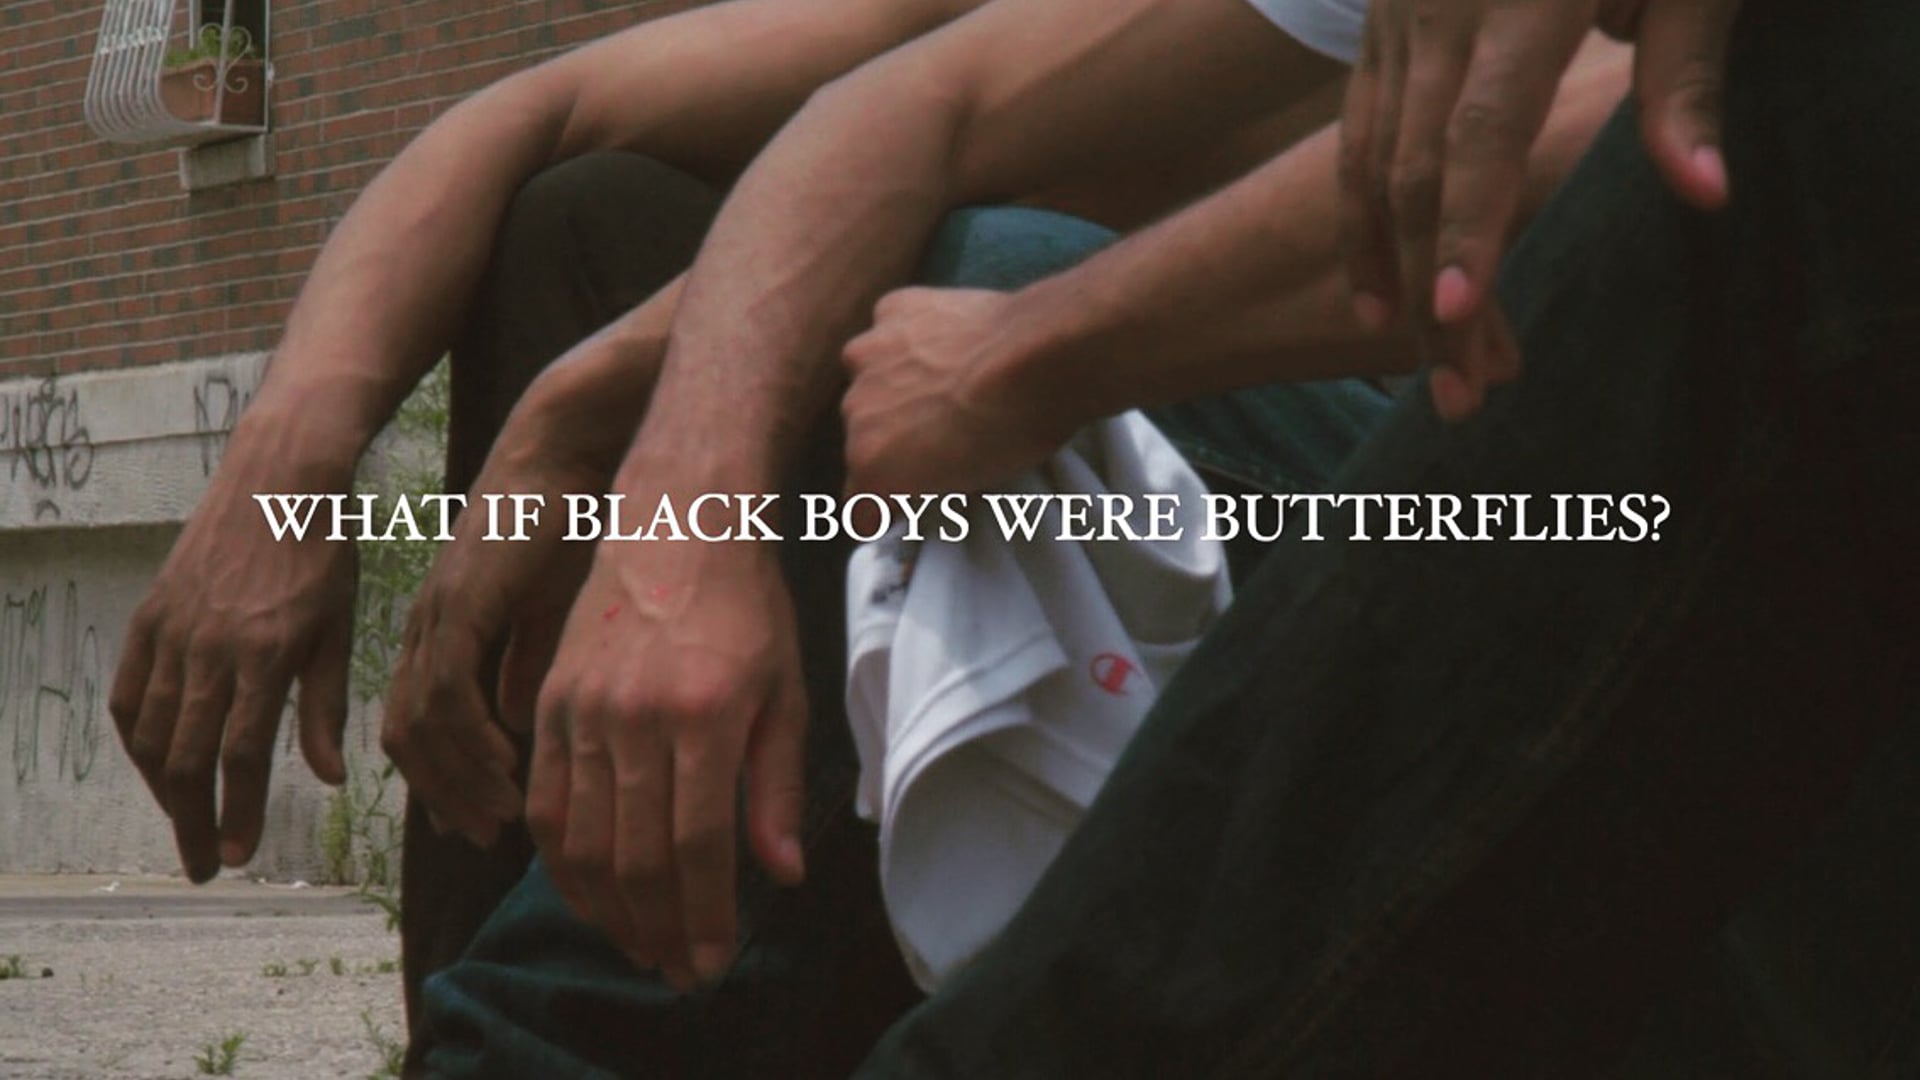 WHAT IF BLACK BOYS WERE BUTTERFLIES?